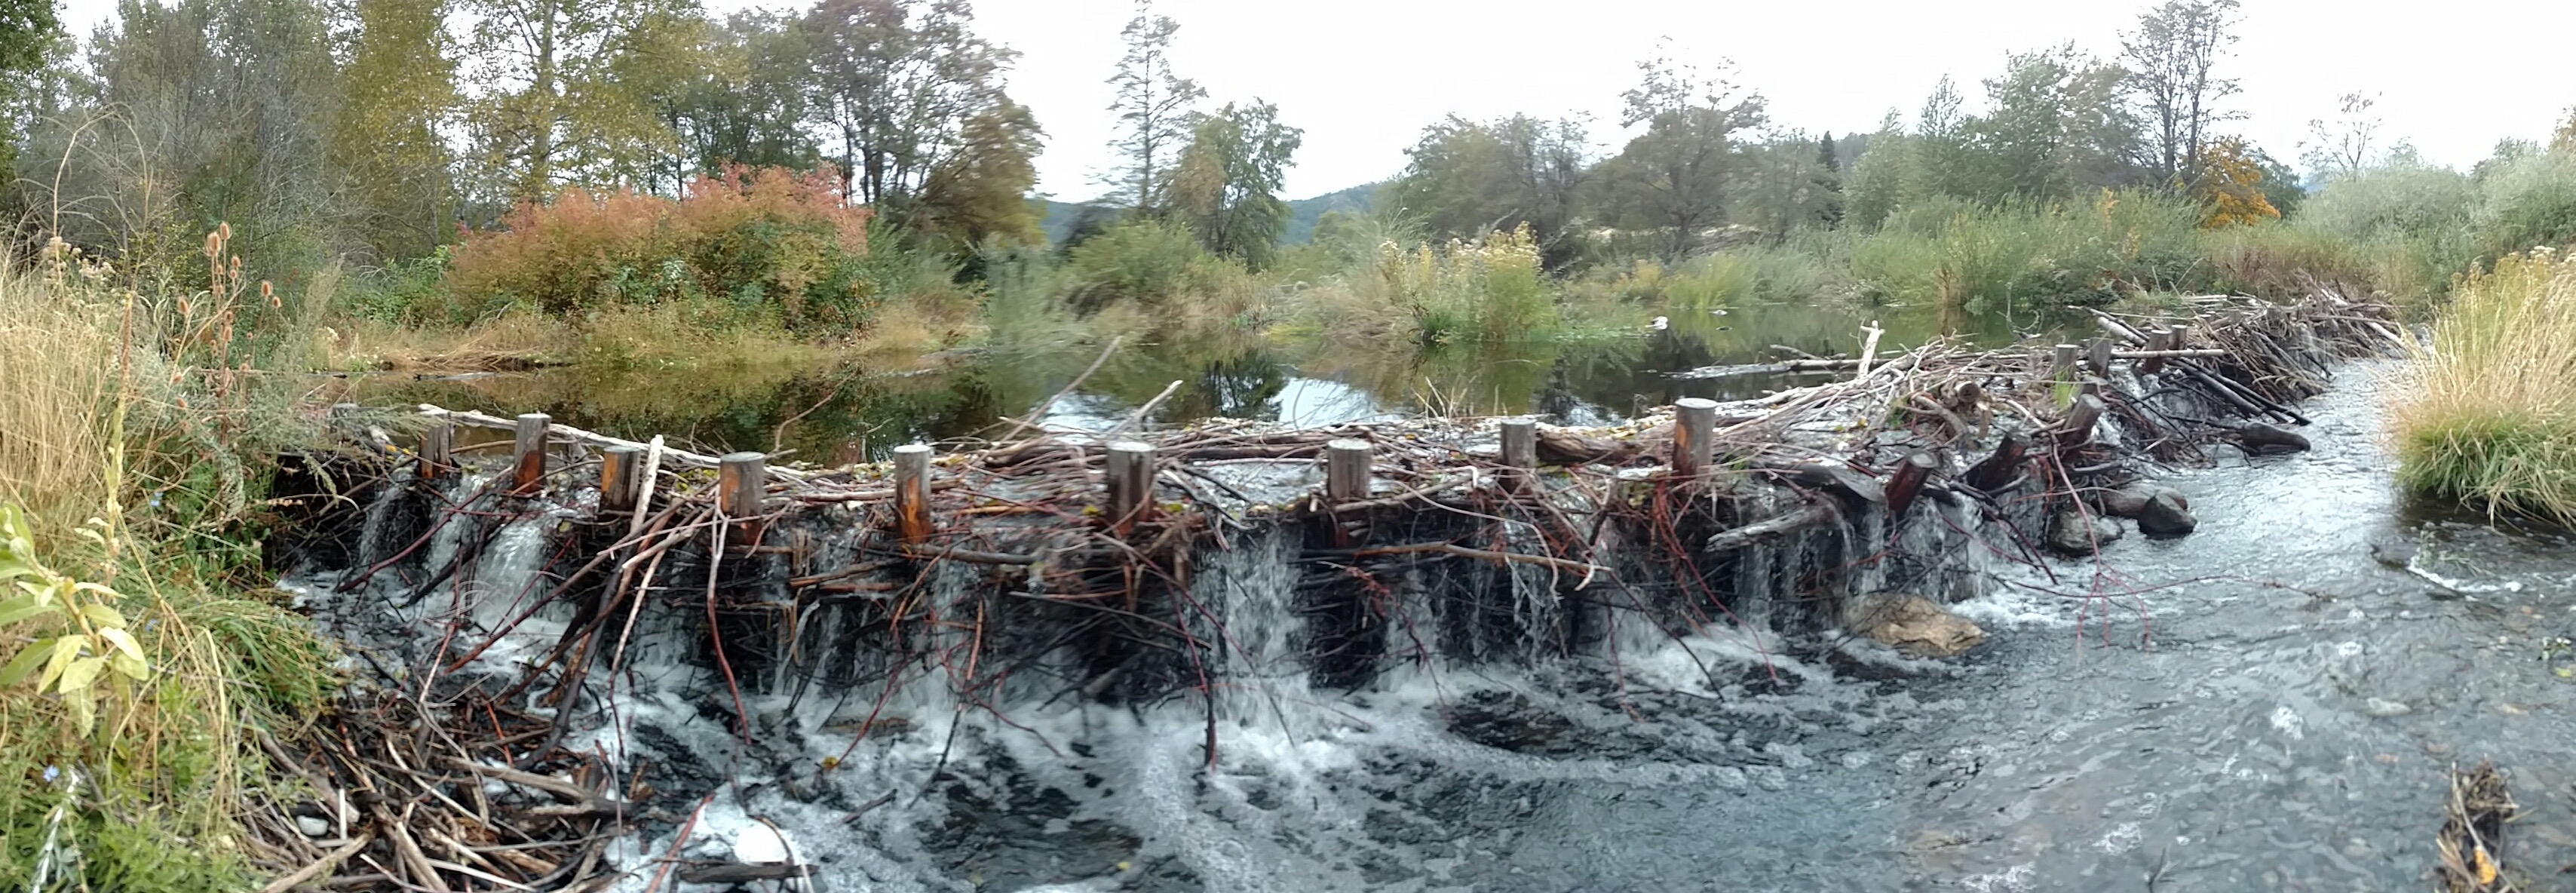 Beaver Dam Analogue on Sugar Creek